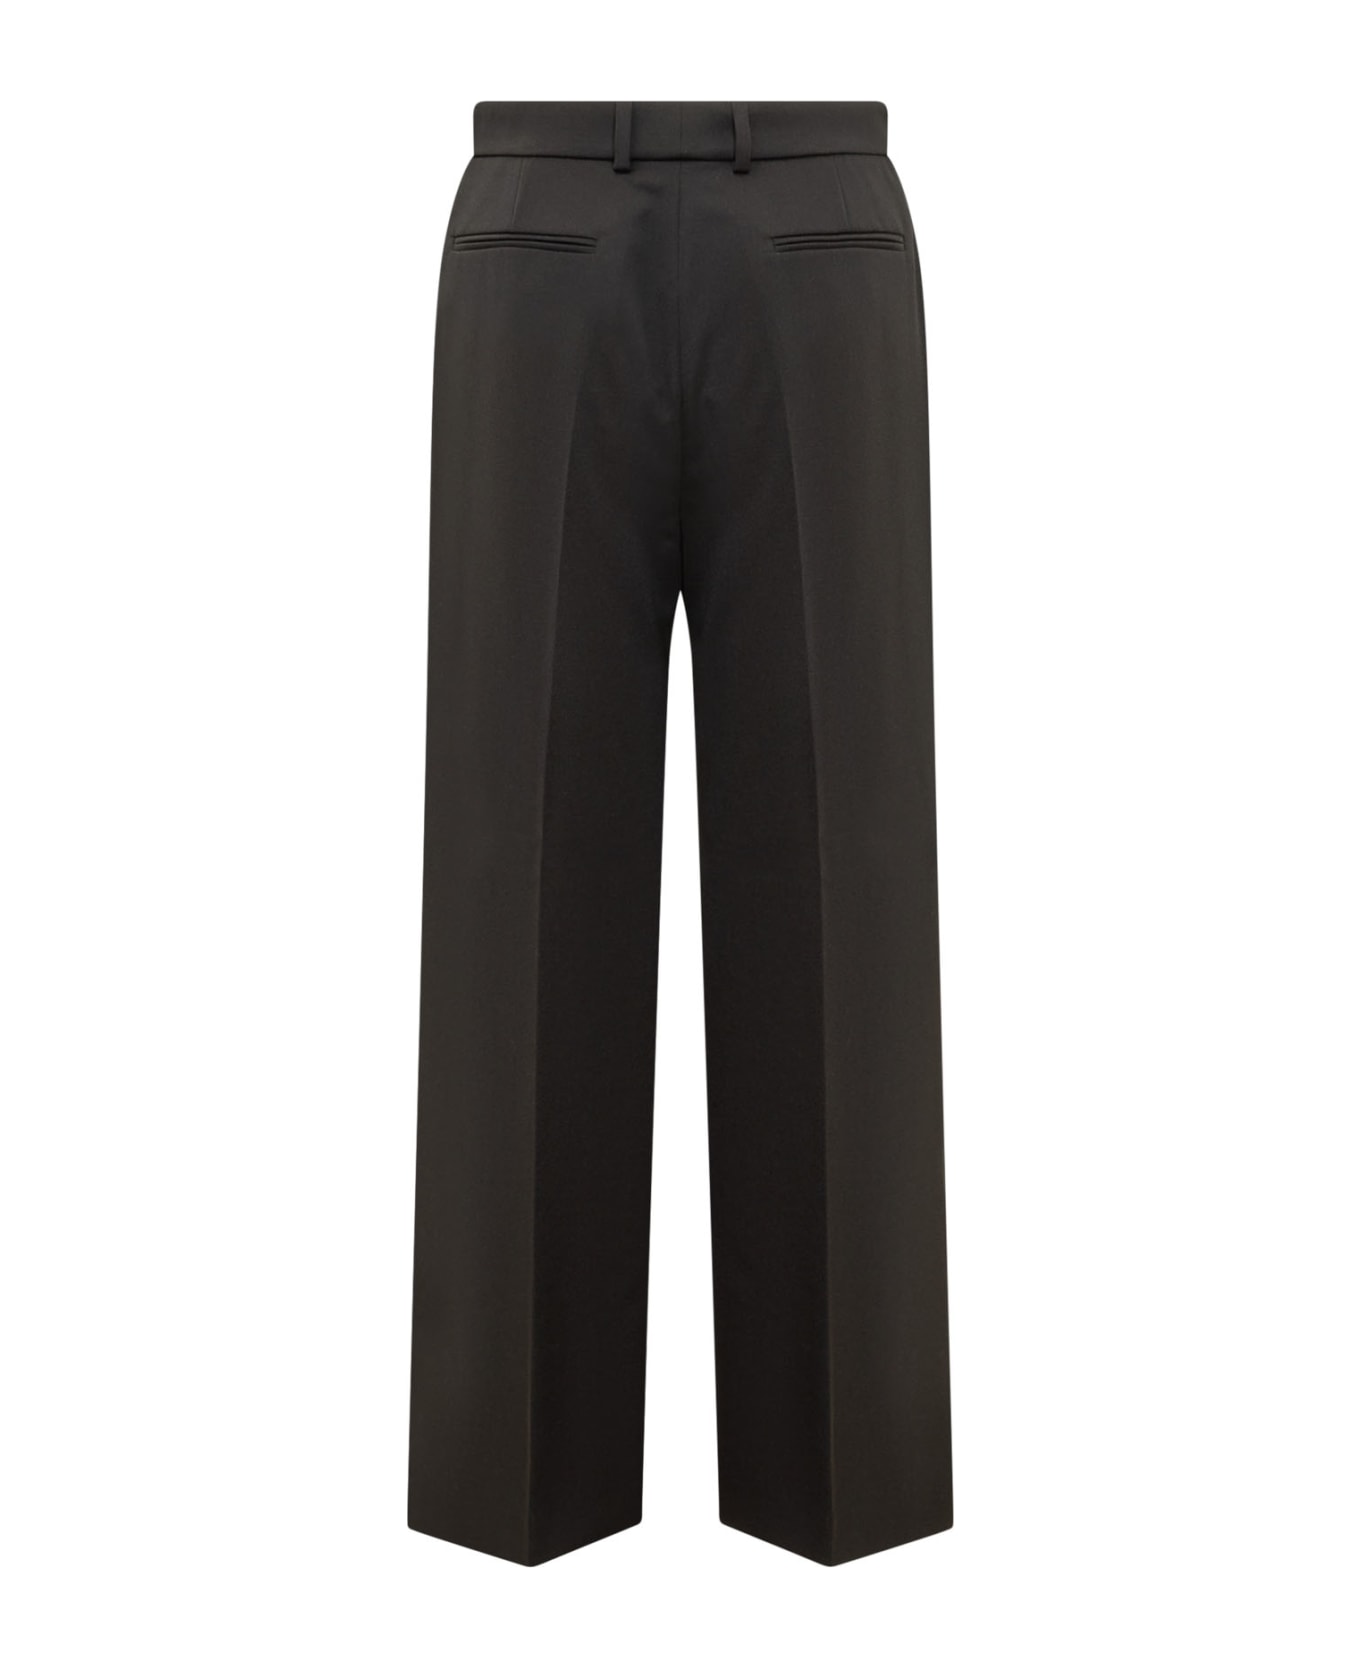 Lanvin Tailored Pants - Black